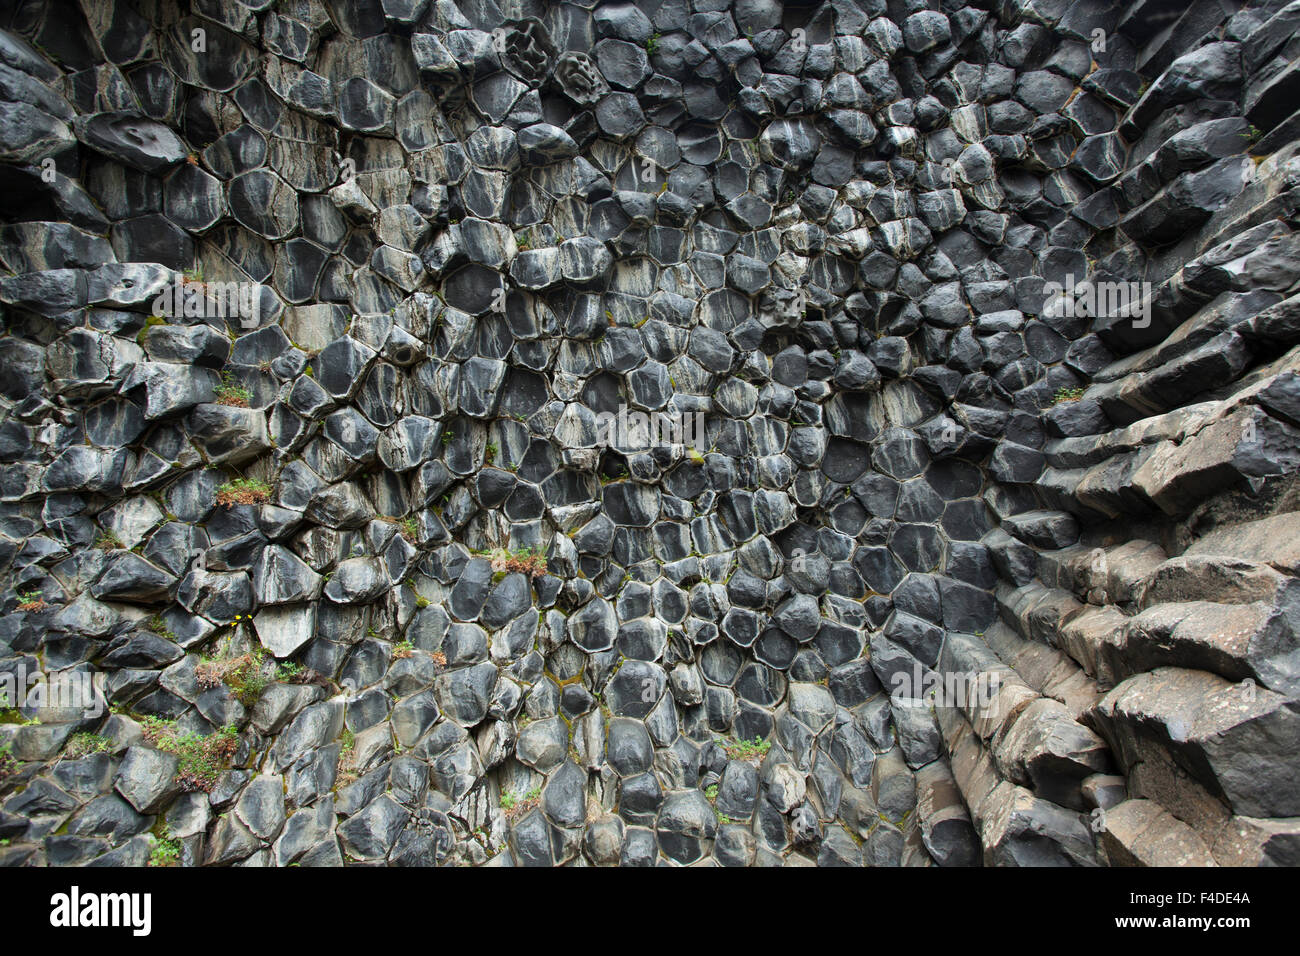 Wabenmuster von Basaltgestein in Hljodaklettar, Jokulsargljufur, Nordhurland Eystra, Island. Stockfoto